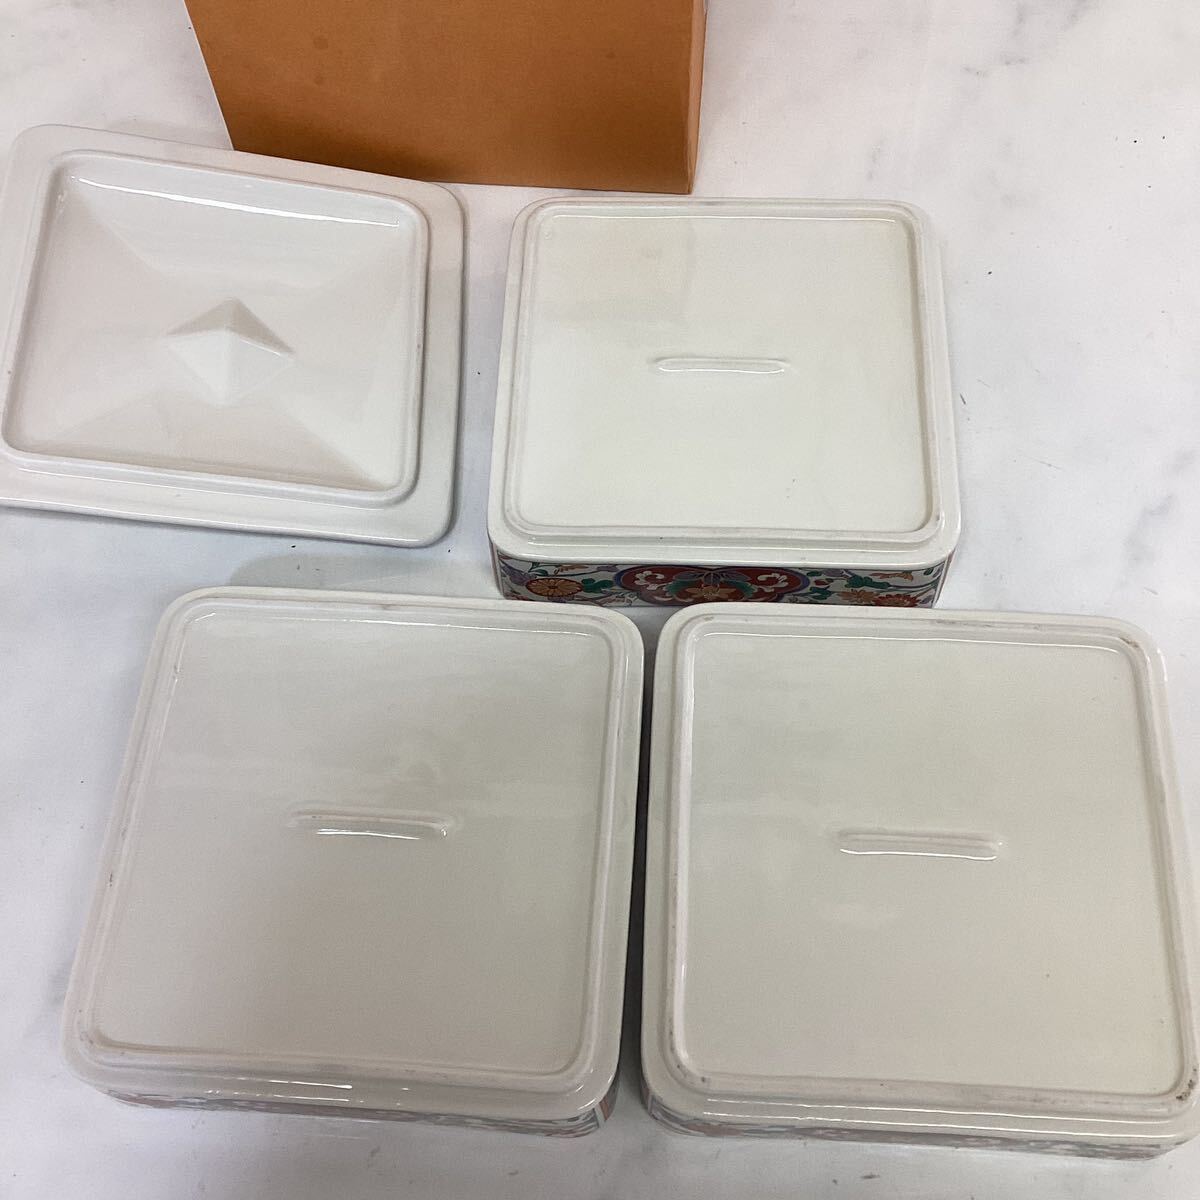  ceramics multi-tiered food box . on Imari lunch box 283 749 four season. vessel one step lack equipped U84